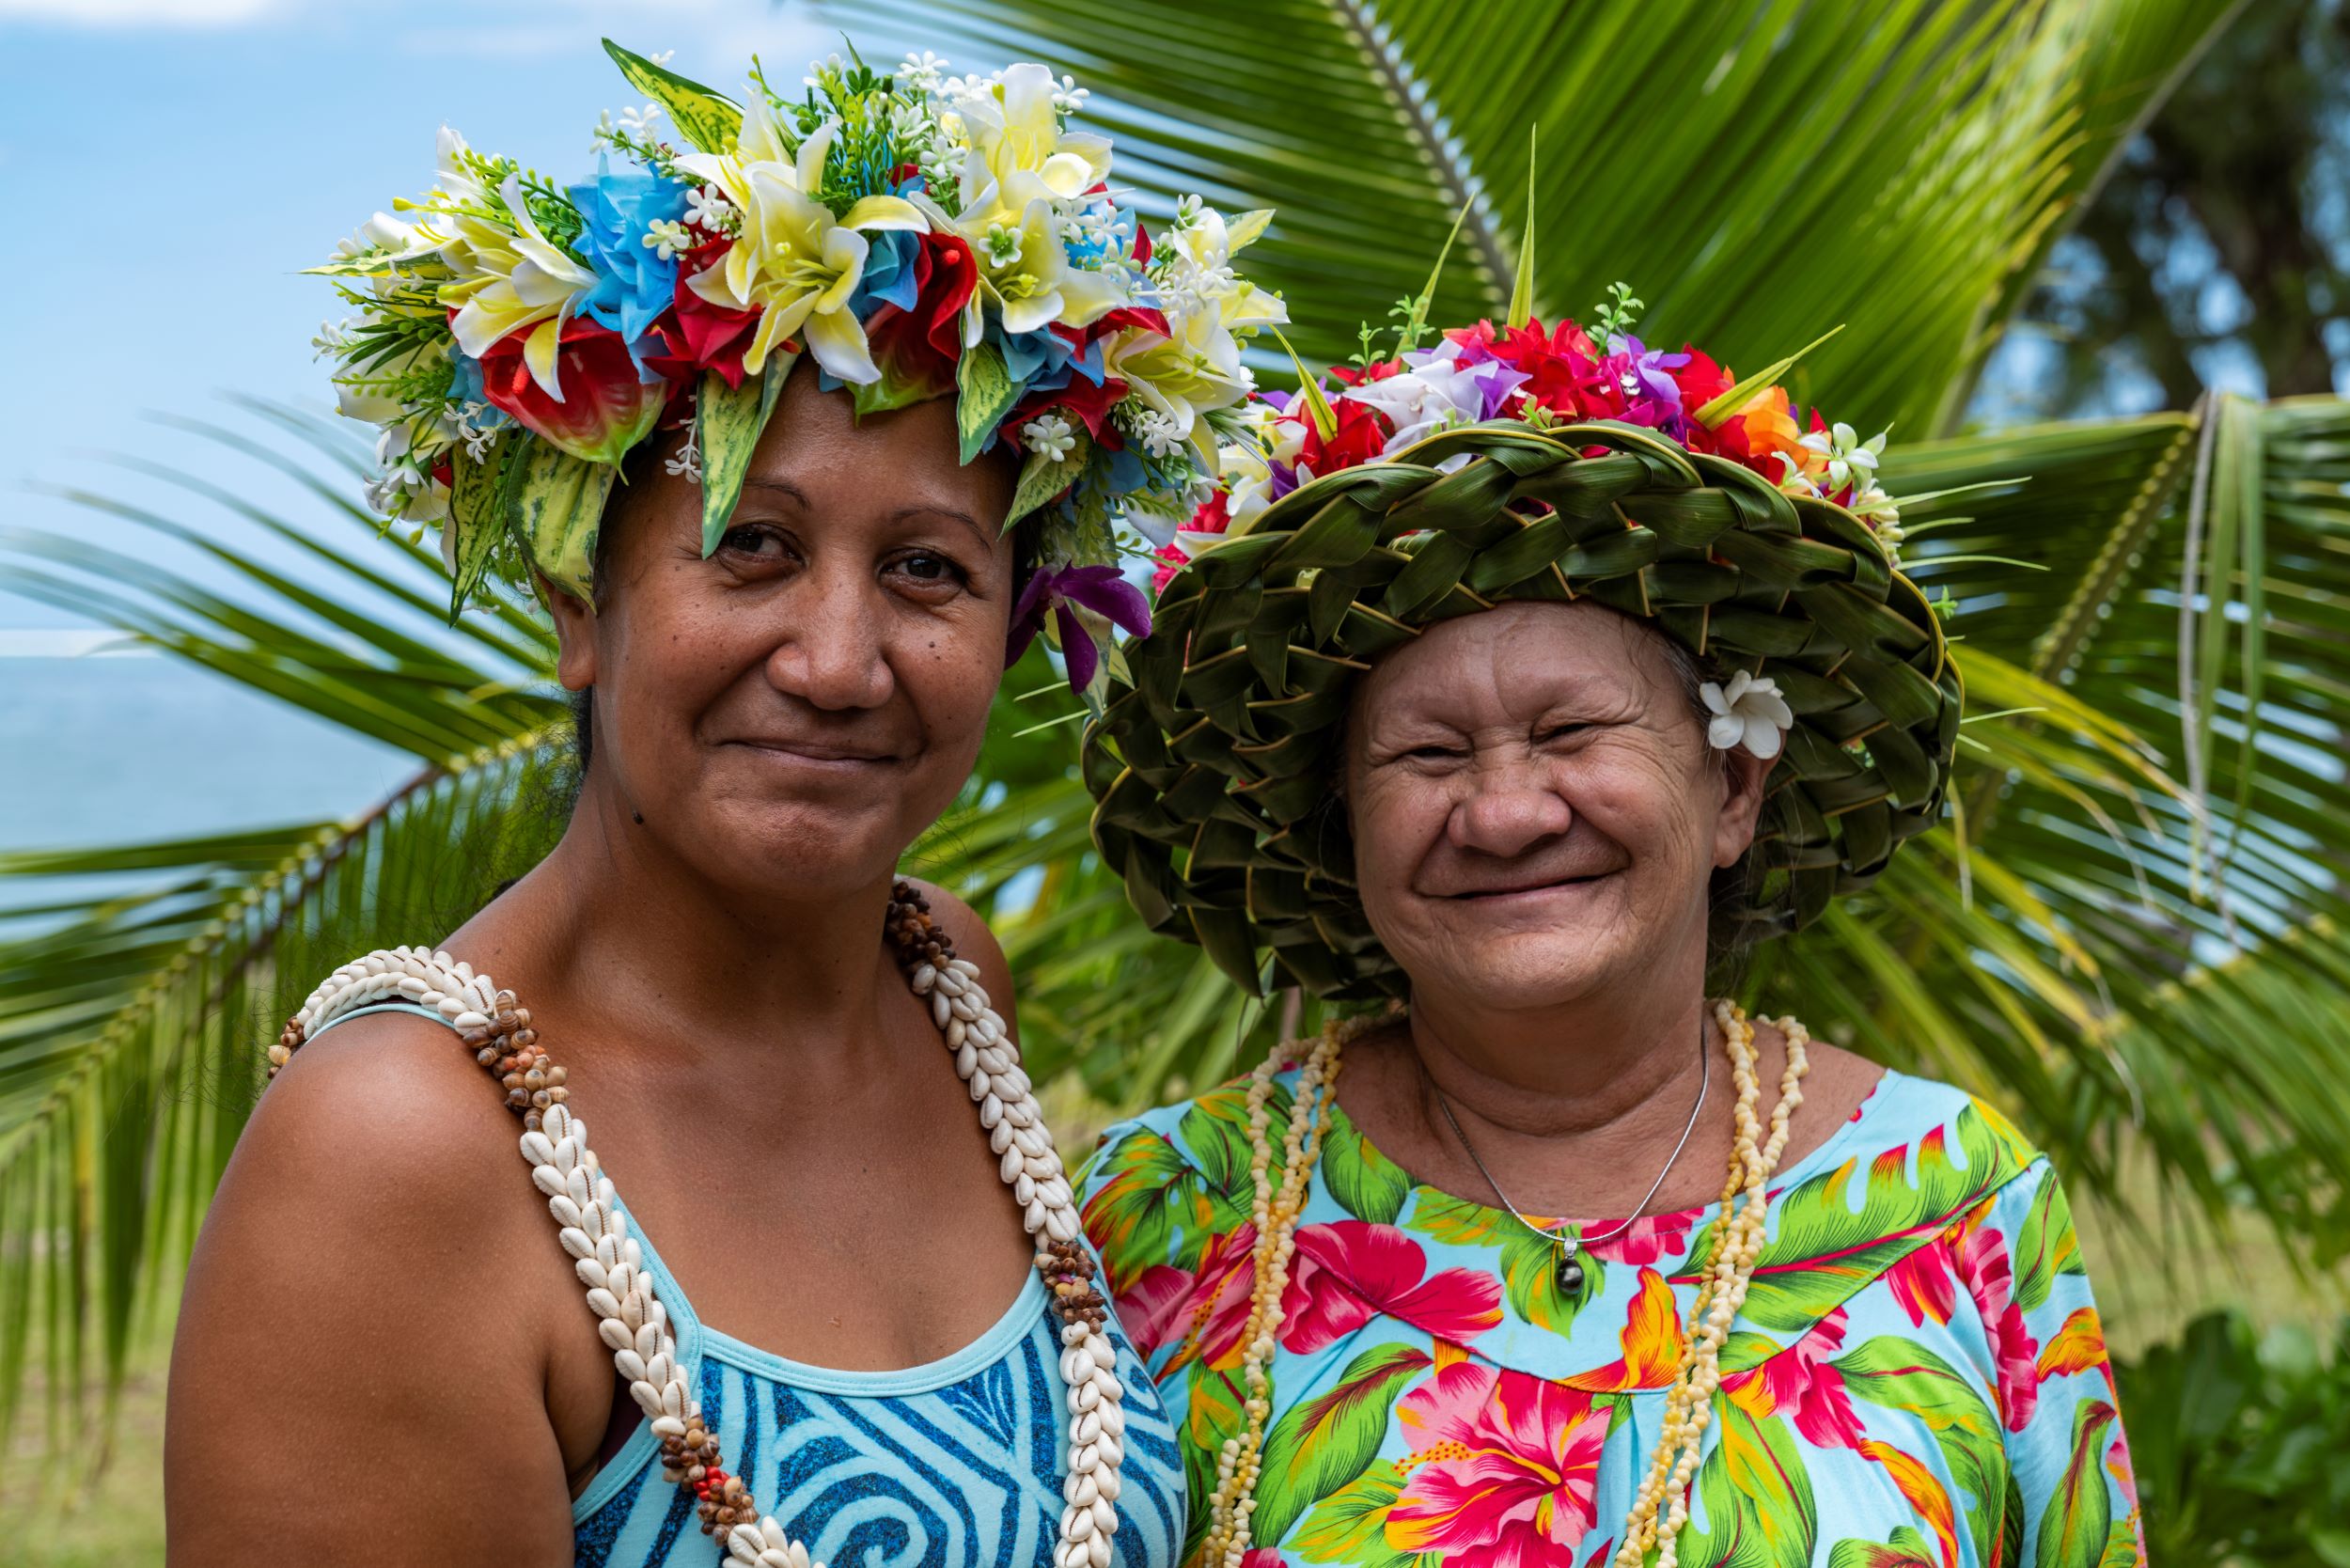 Local Tahitian ladies - Tahiti Tourisme, Holger Leue